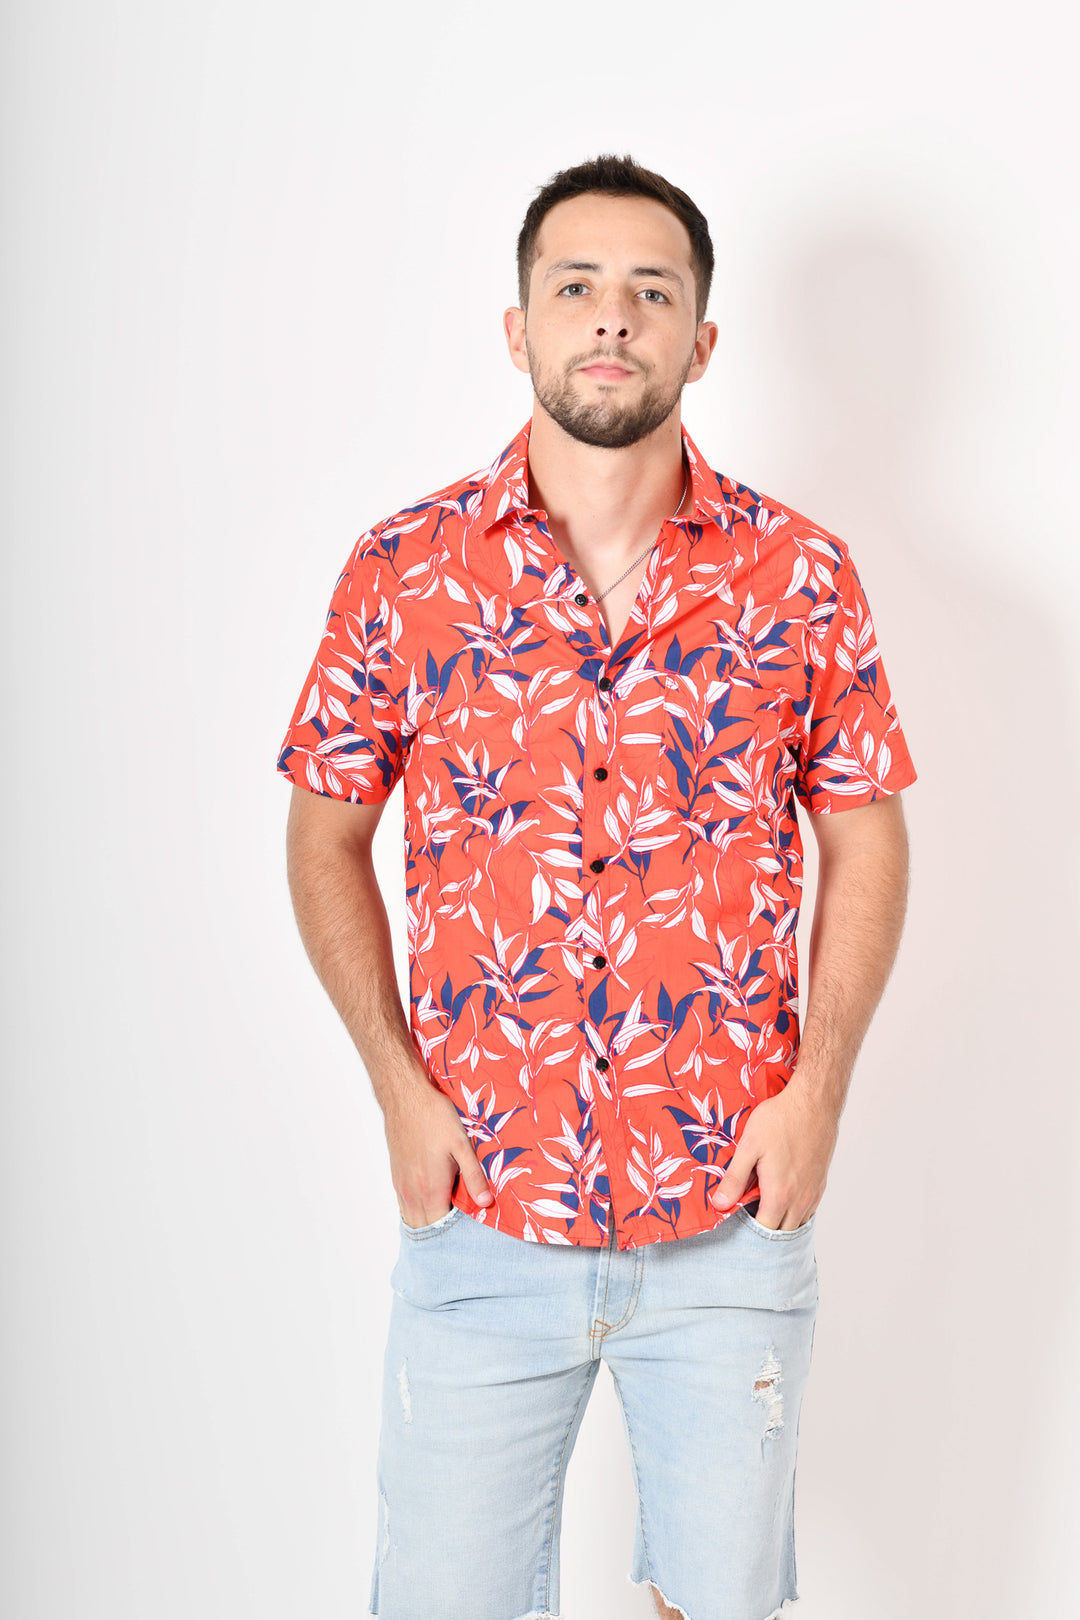 Camisa tropical de flores -  roja blanca